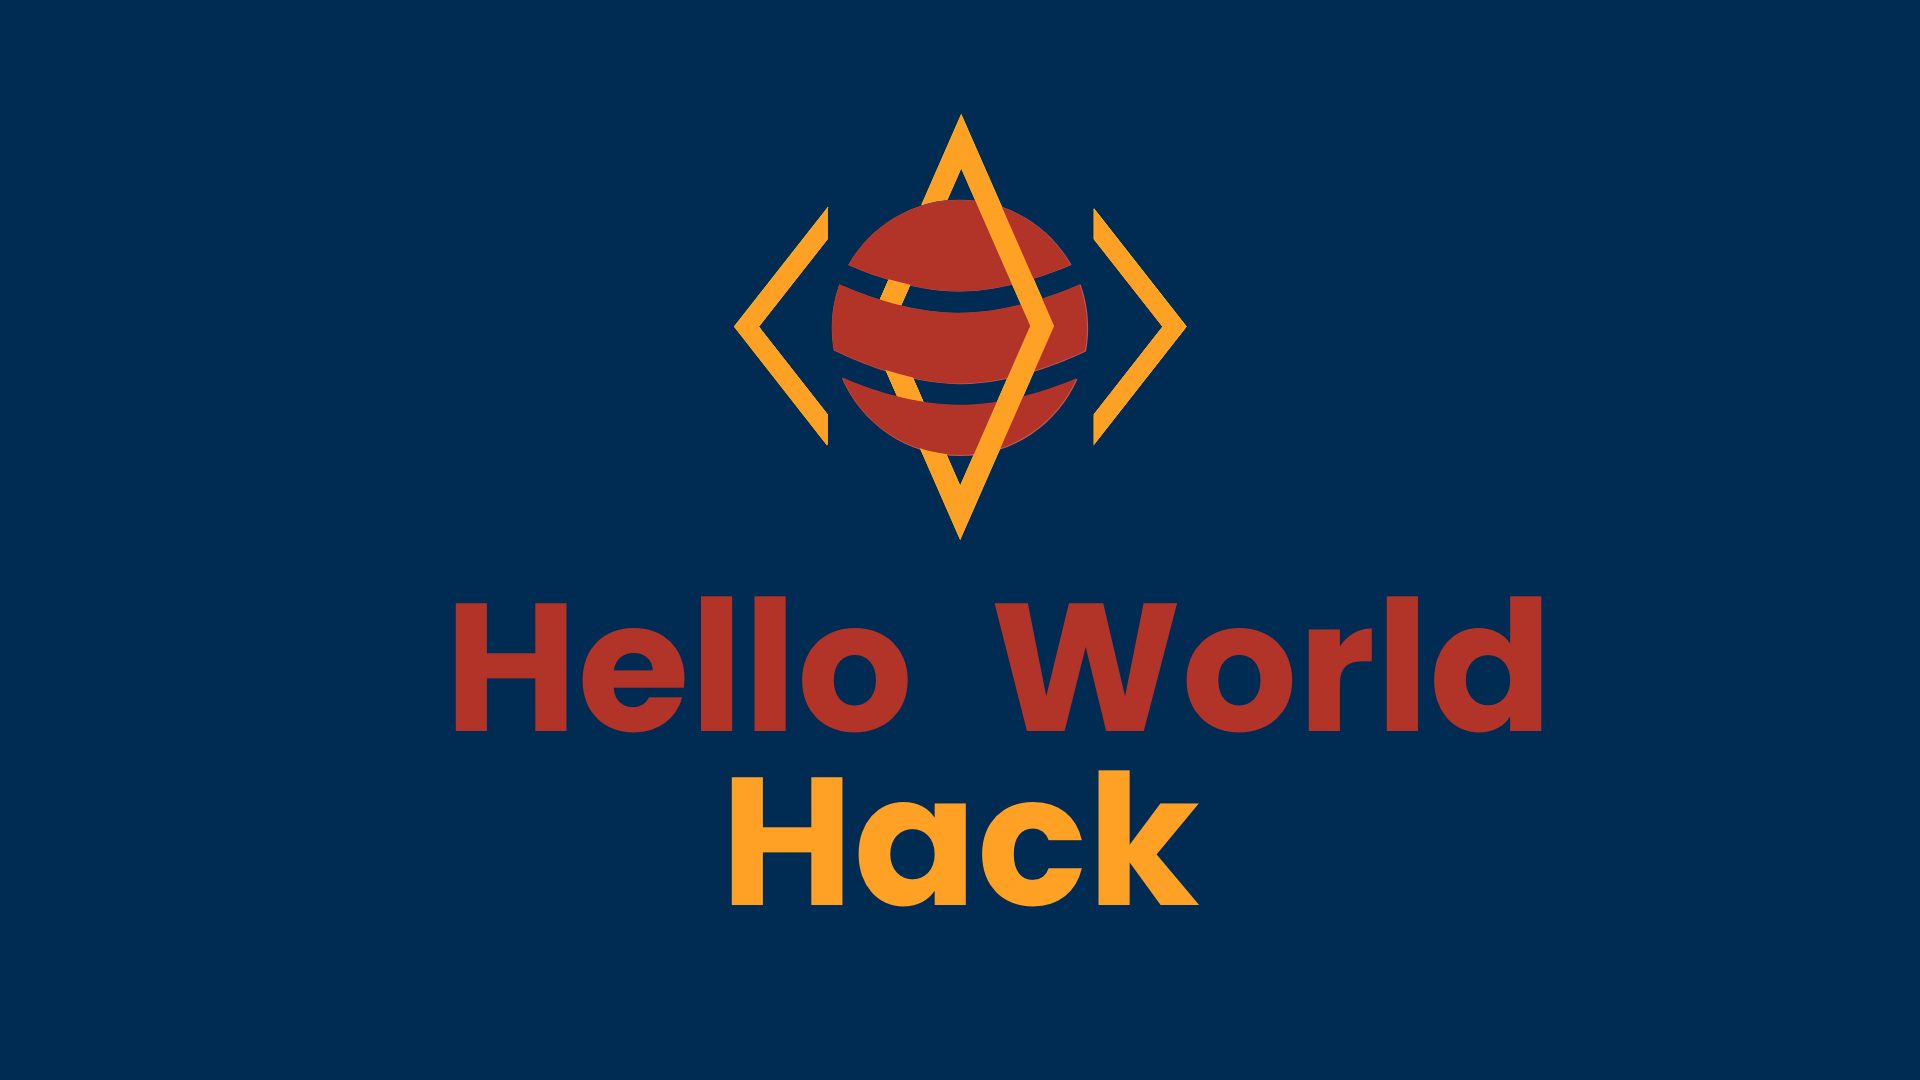 Hello world hack 2021 logo